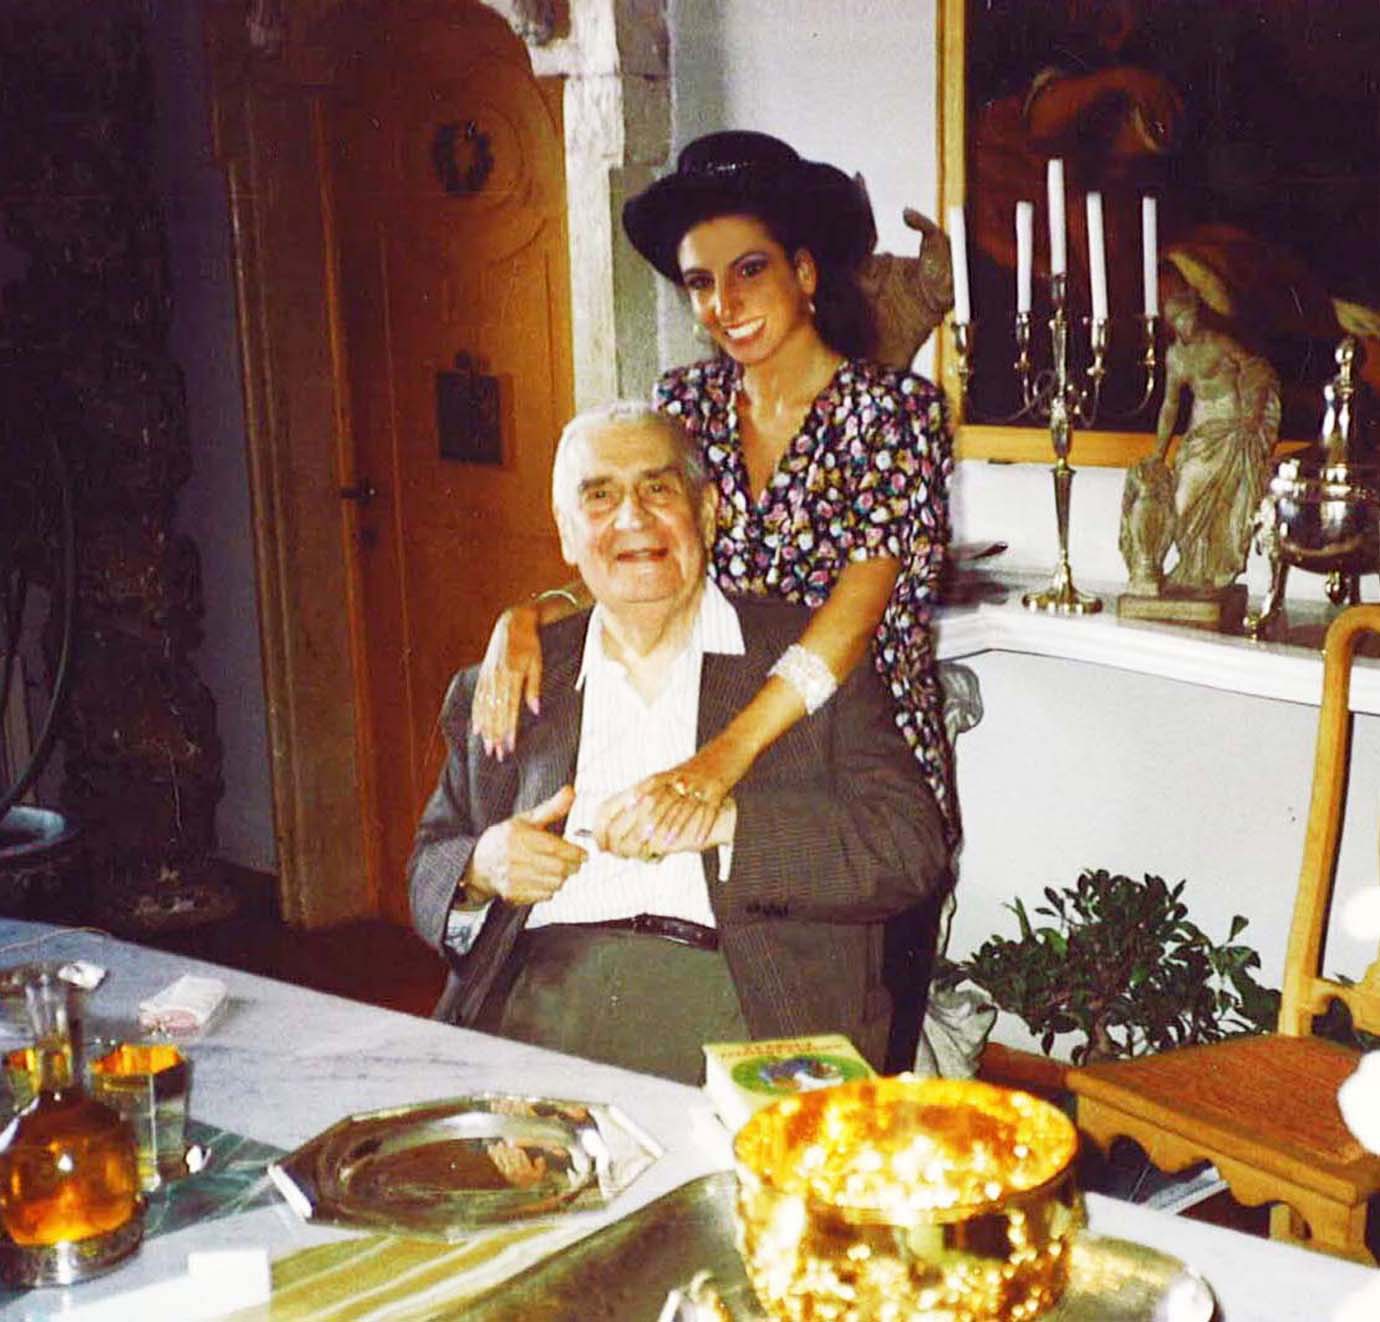 Lucia AlibertiI with the Italian Art Historian Federico Zeri⚘Great Friend⚘Guest in his Home-Museum⚘Casale⚘Rome⚘:http://www.luciaaliberti.it #luciaaliberti #federicozeri #casale #rome #friend